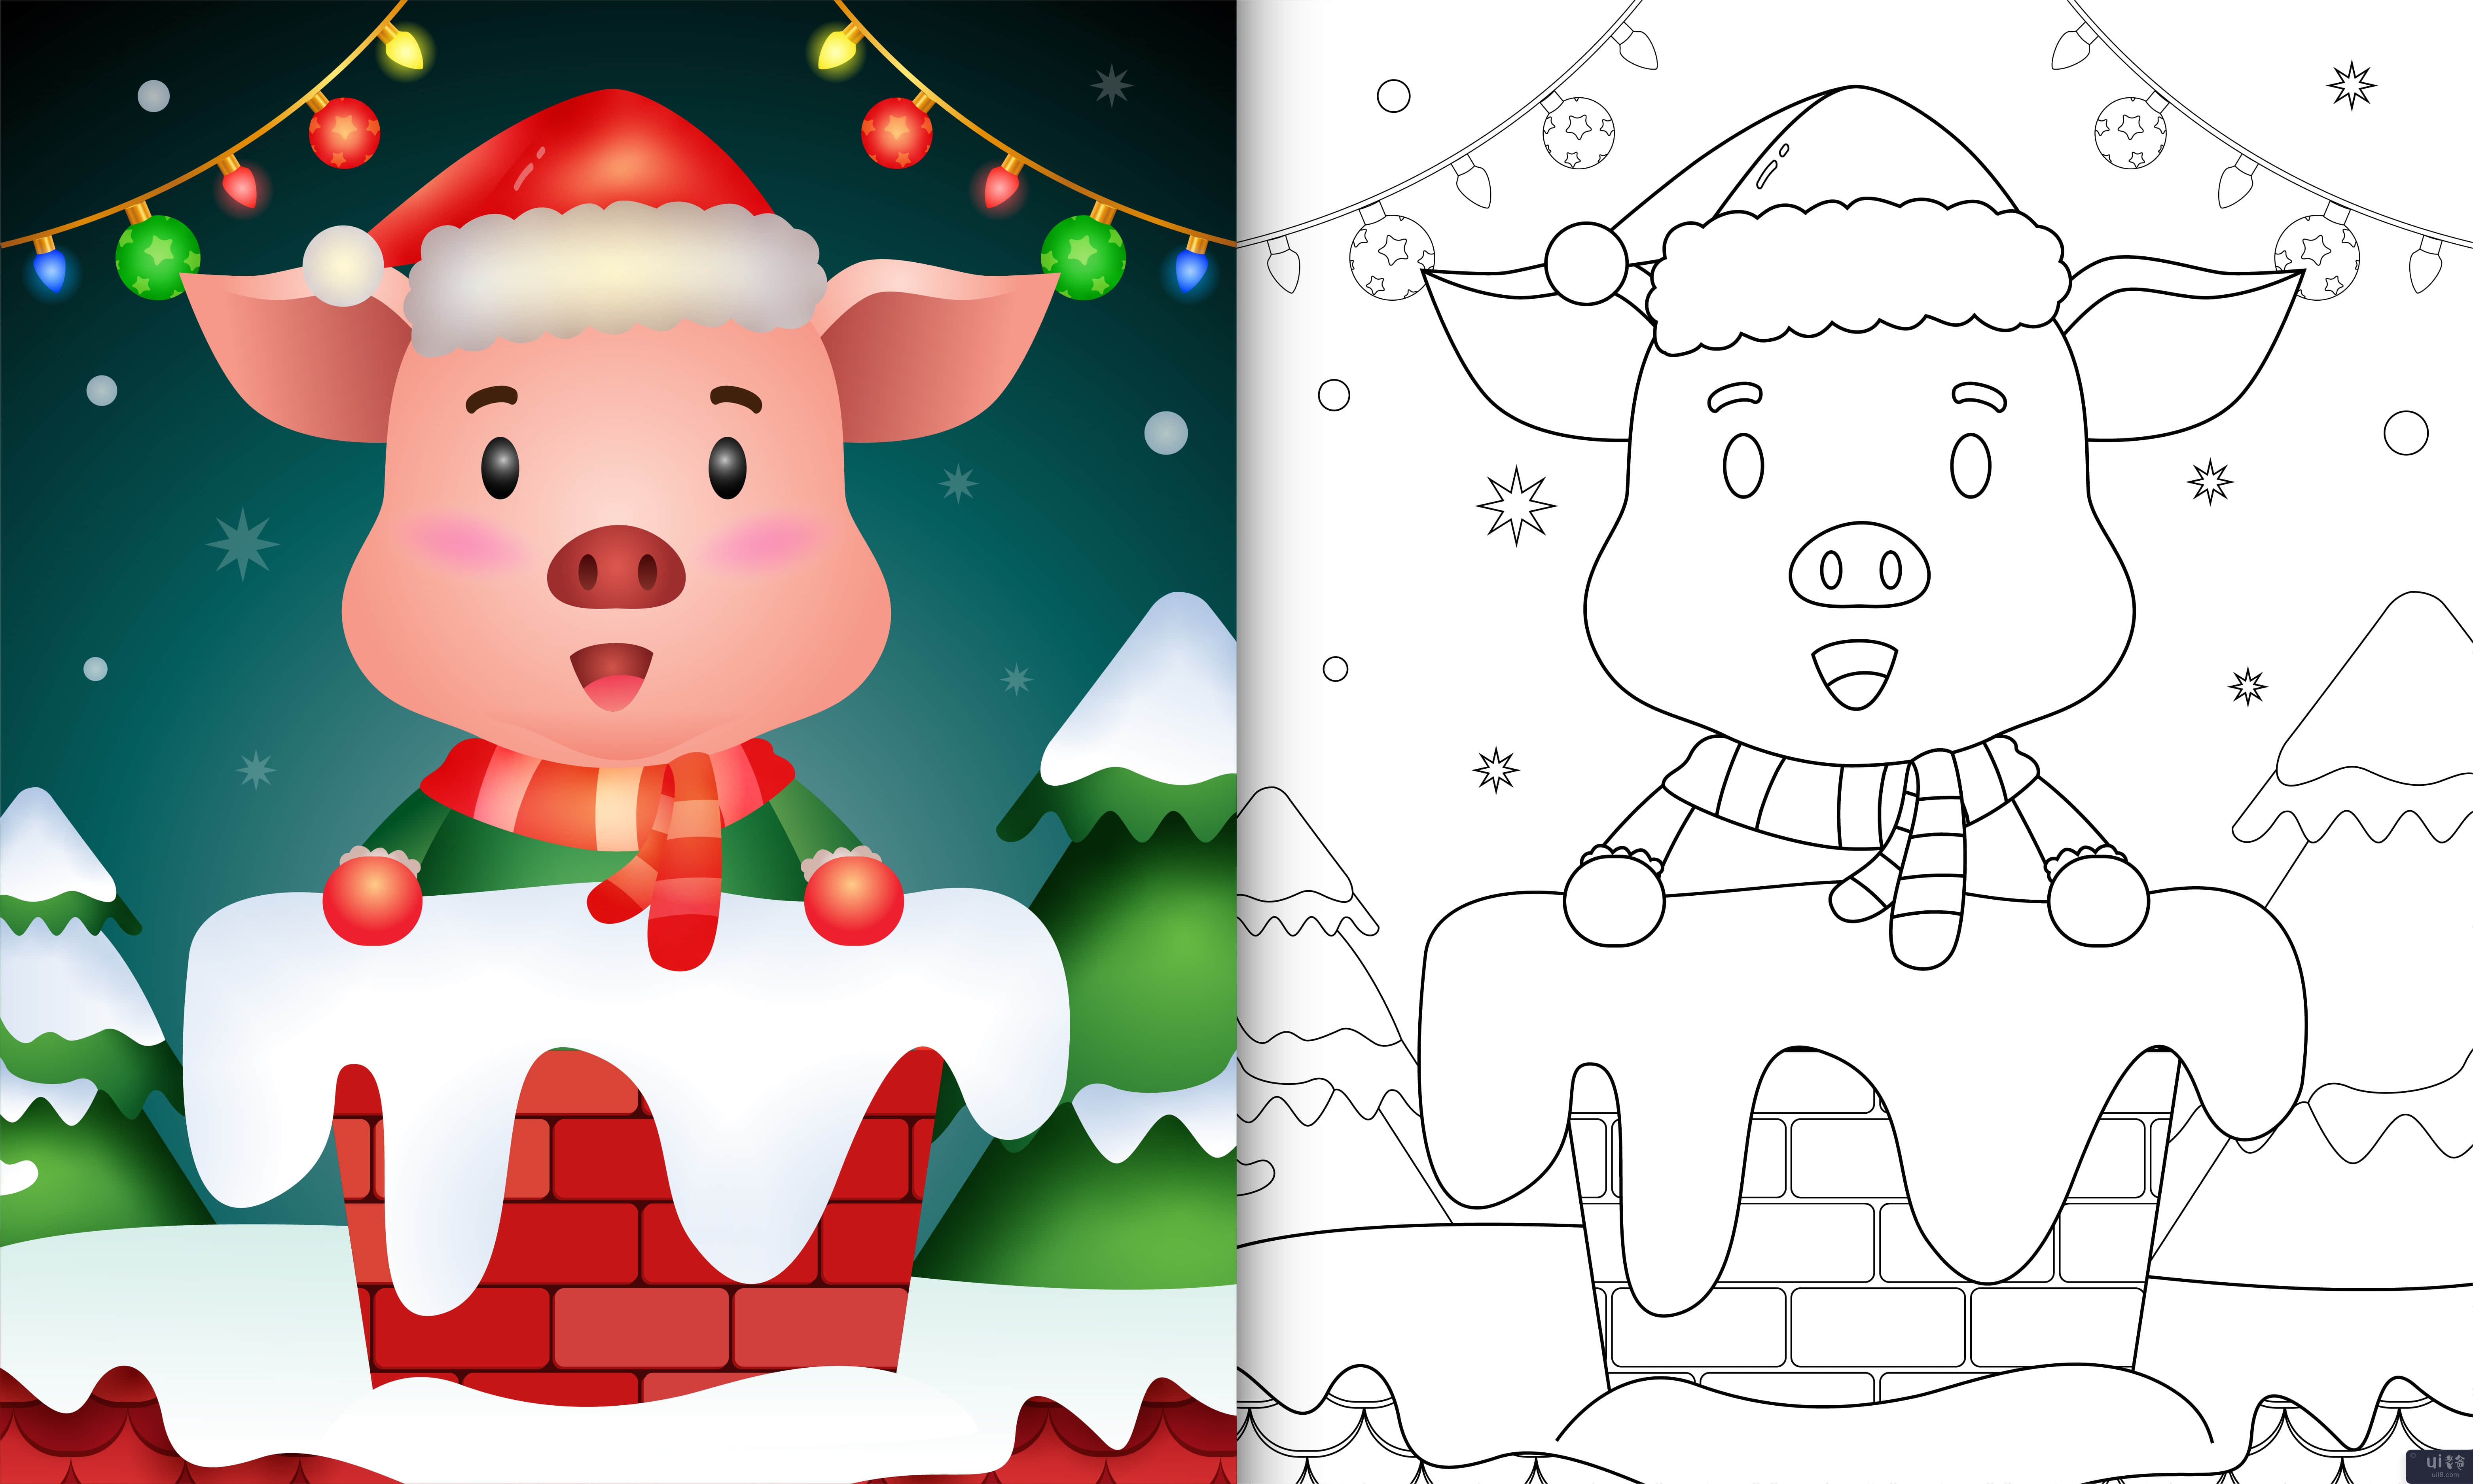 用圣诞老人的帽子和围巾在烟囱里给孩子们涂上可爱的猪(coloring for kids with a cute pig using santa hat and scarf in chimney)插图2